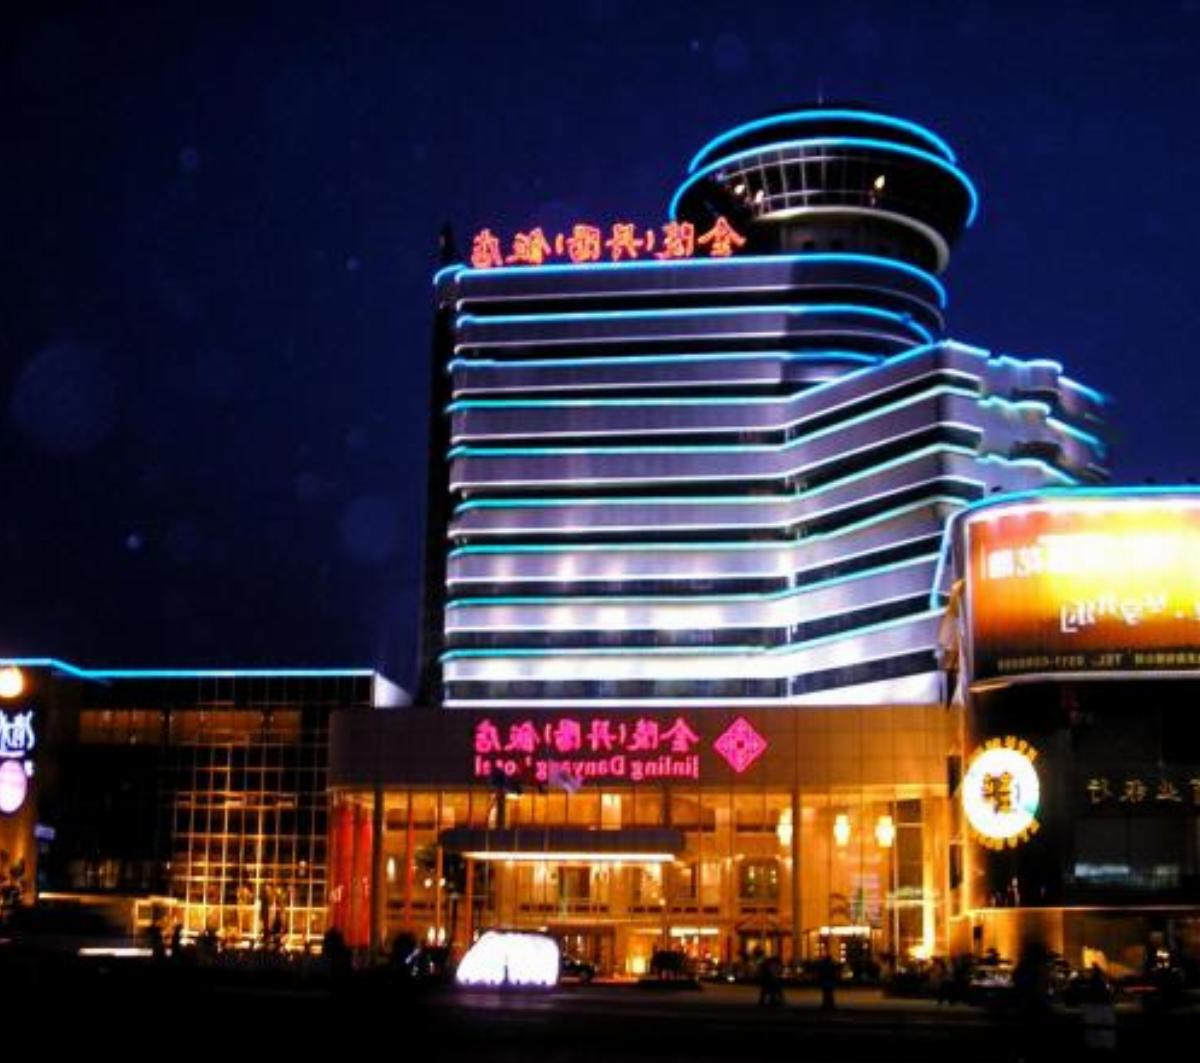 Jinling Danyang Hotel Hotel Danyang China